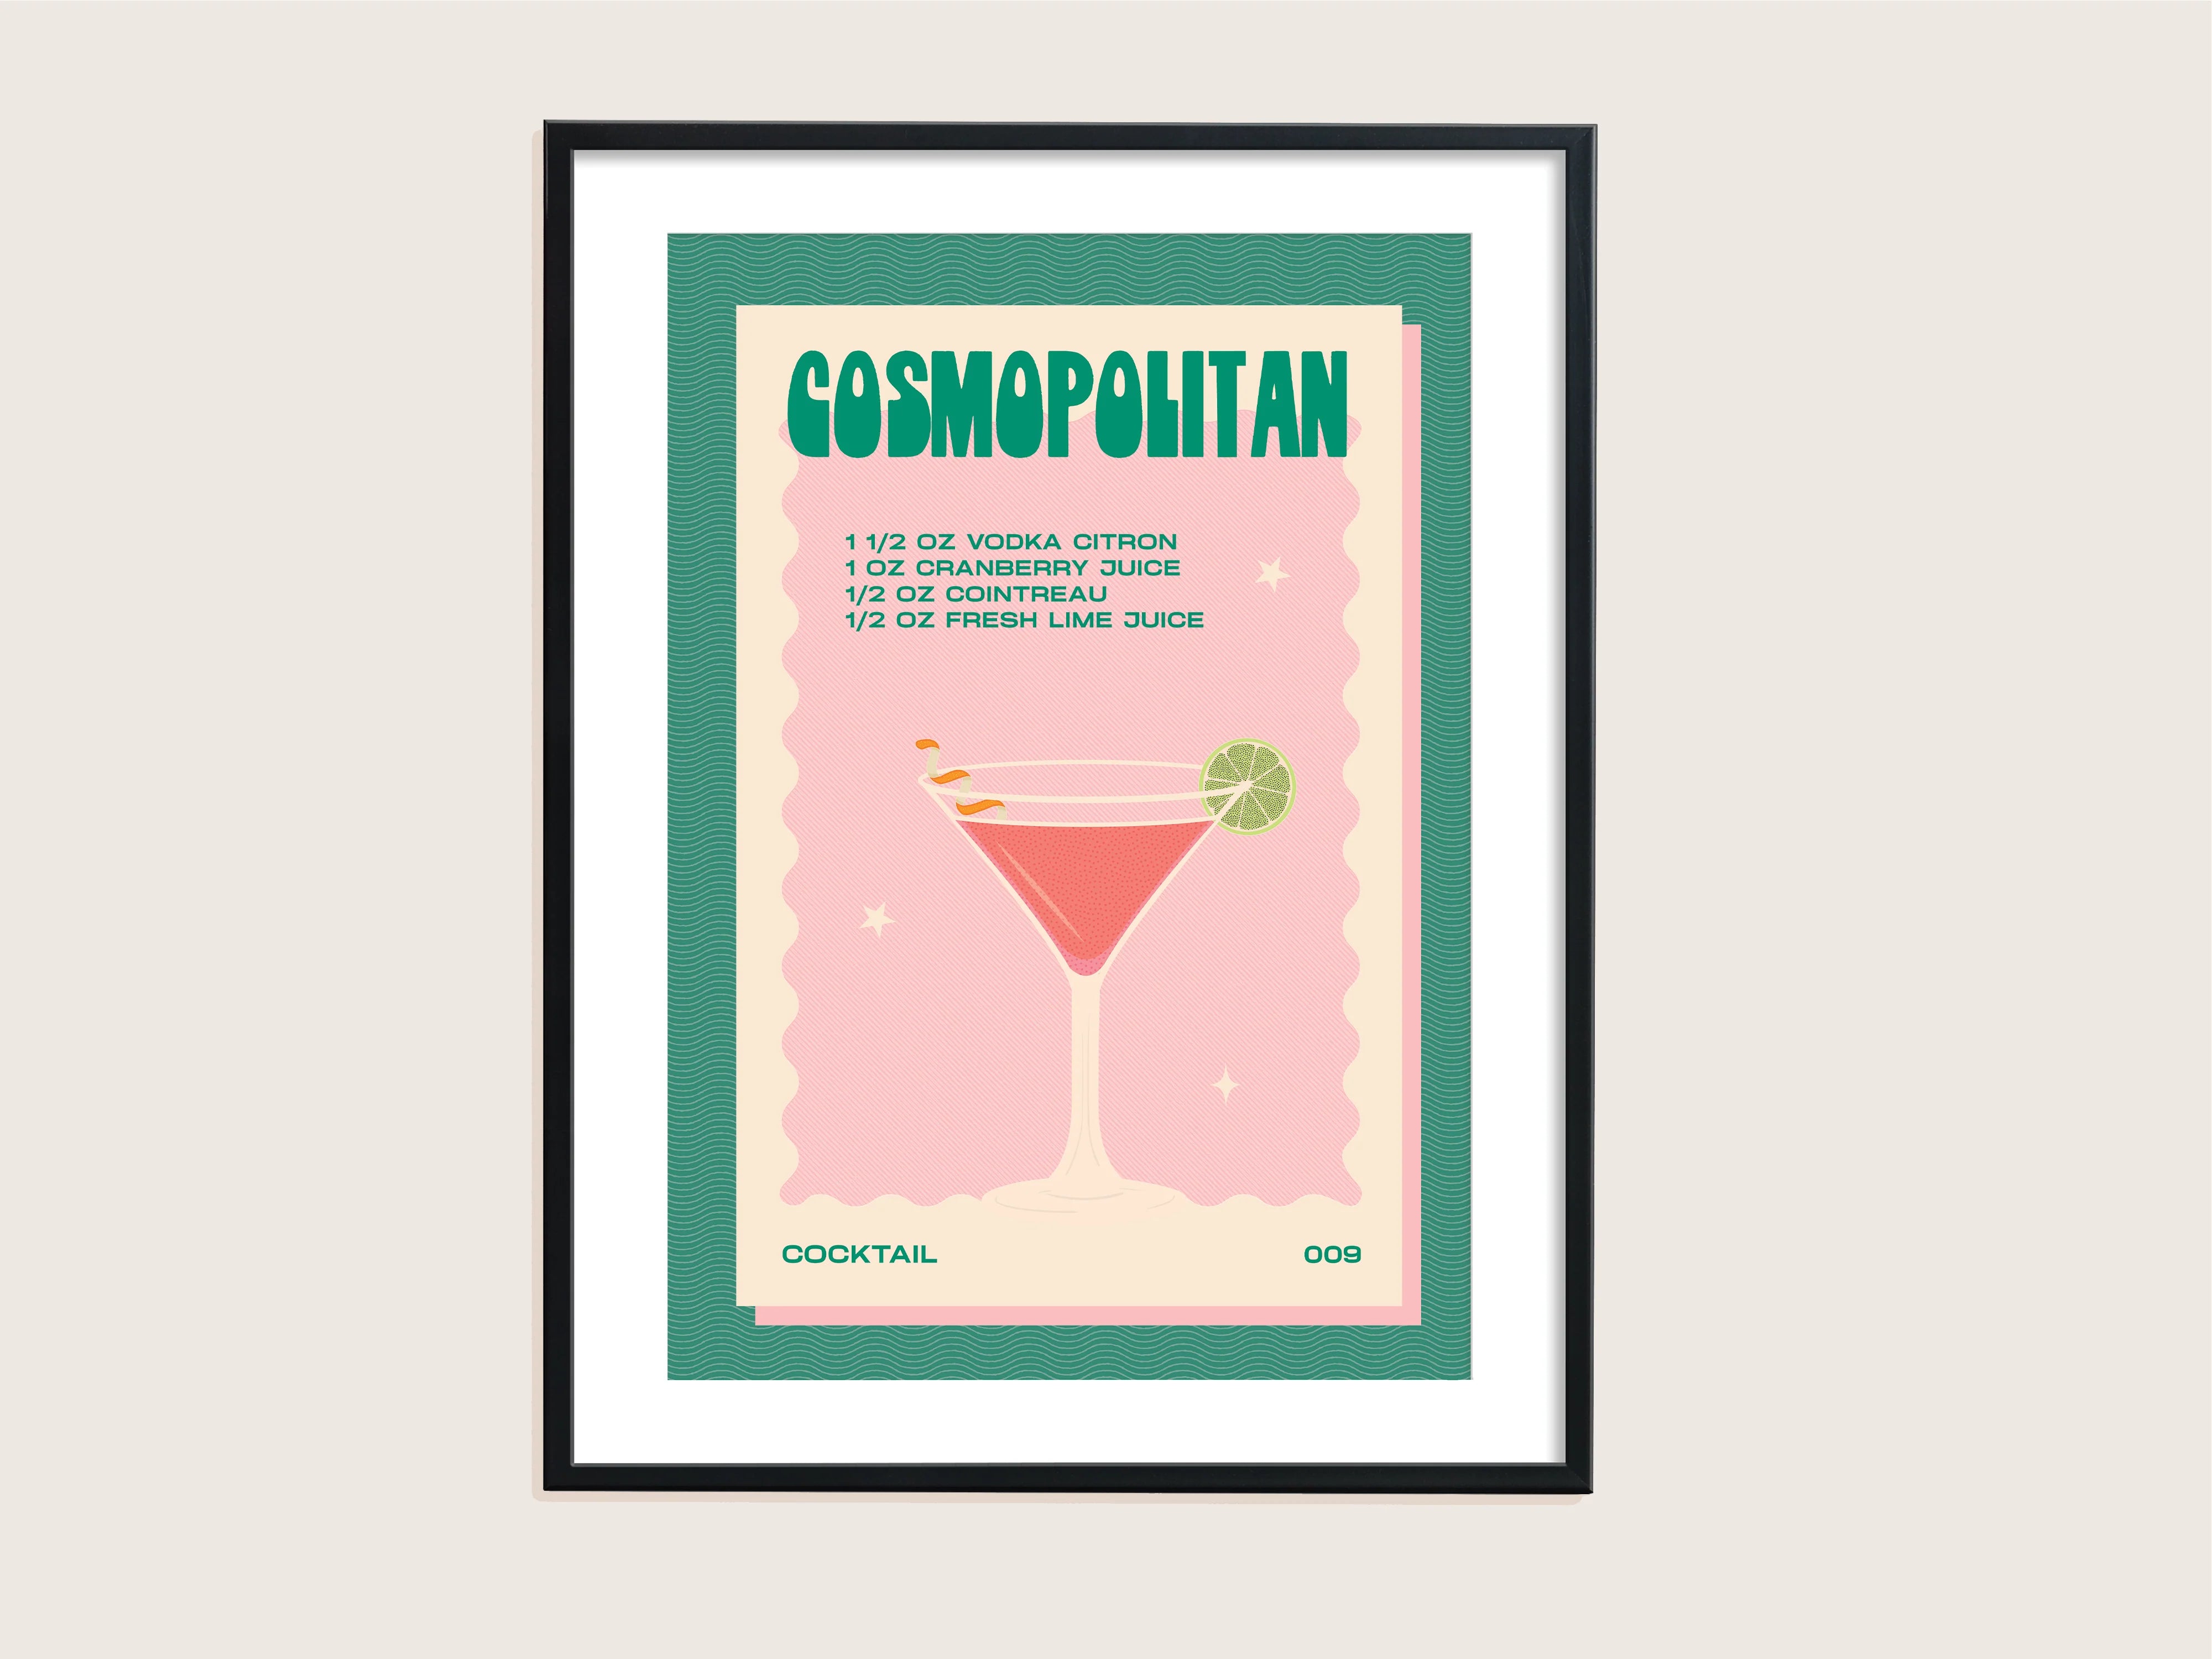 COSMOPOLITAN (GREEN & PINK) A4 | PRINT BY PROPER GOOD